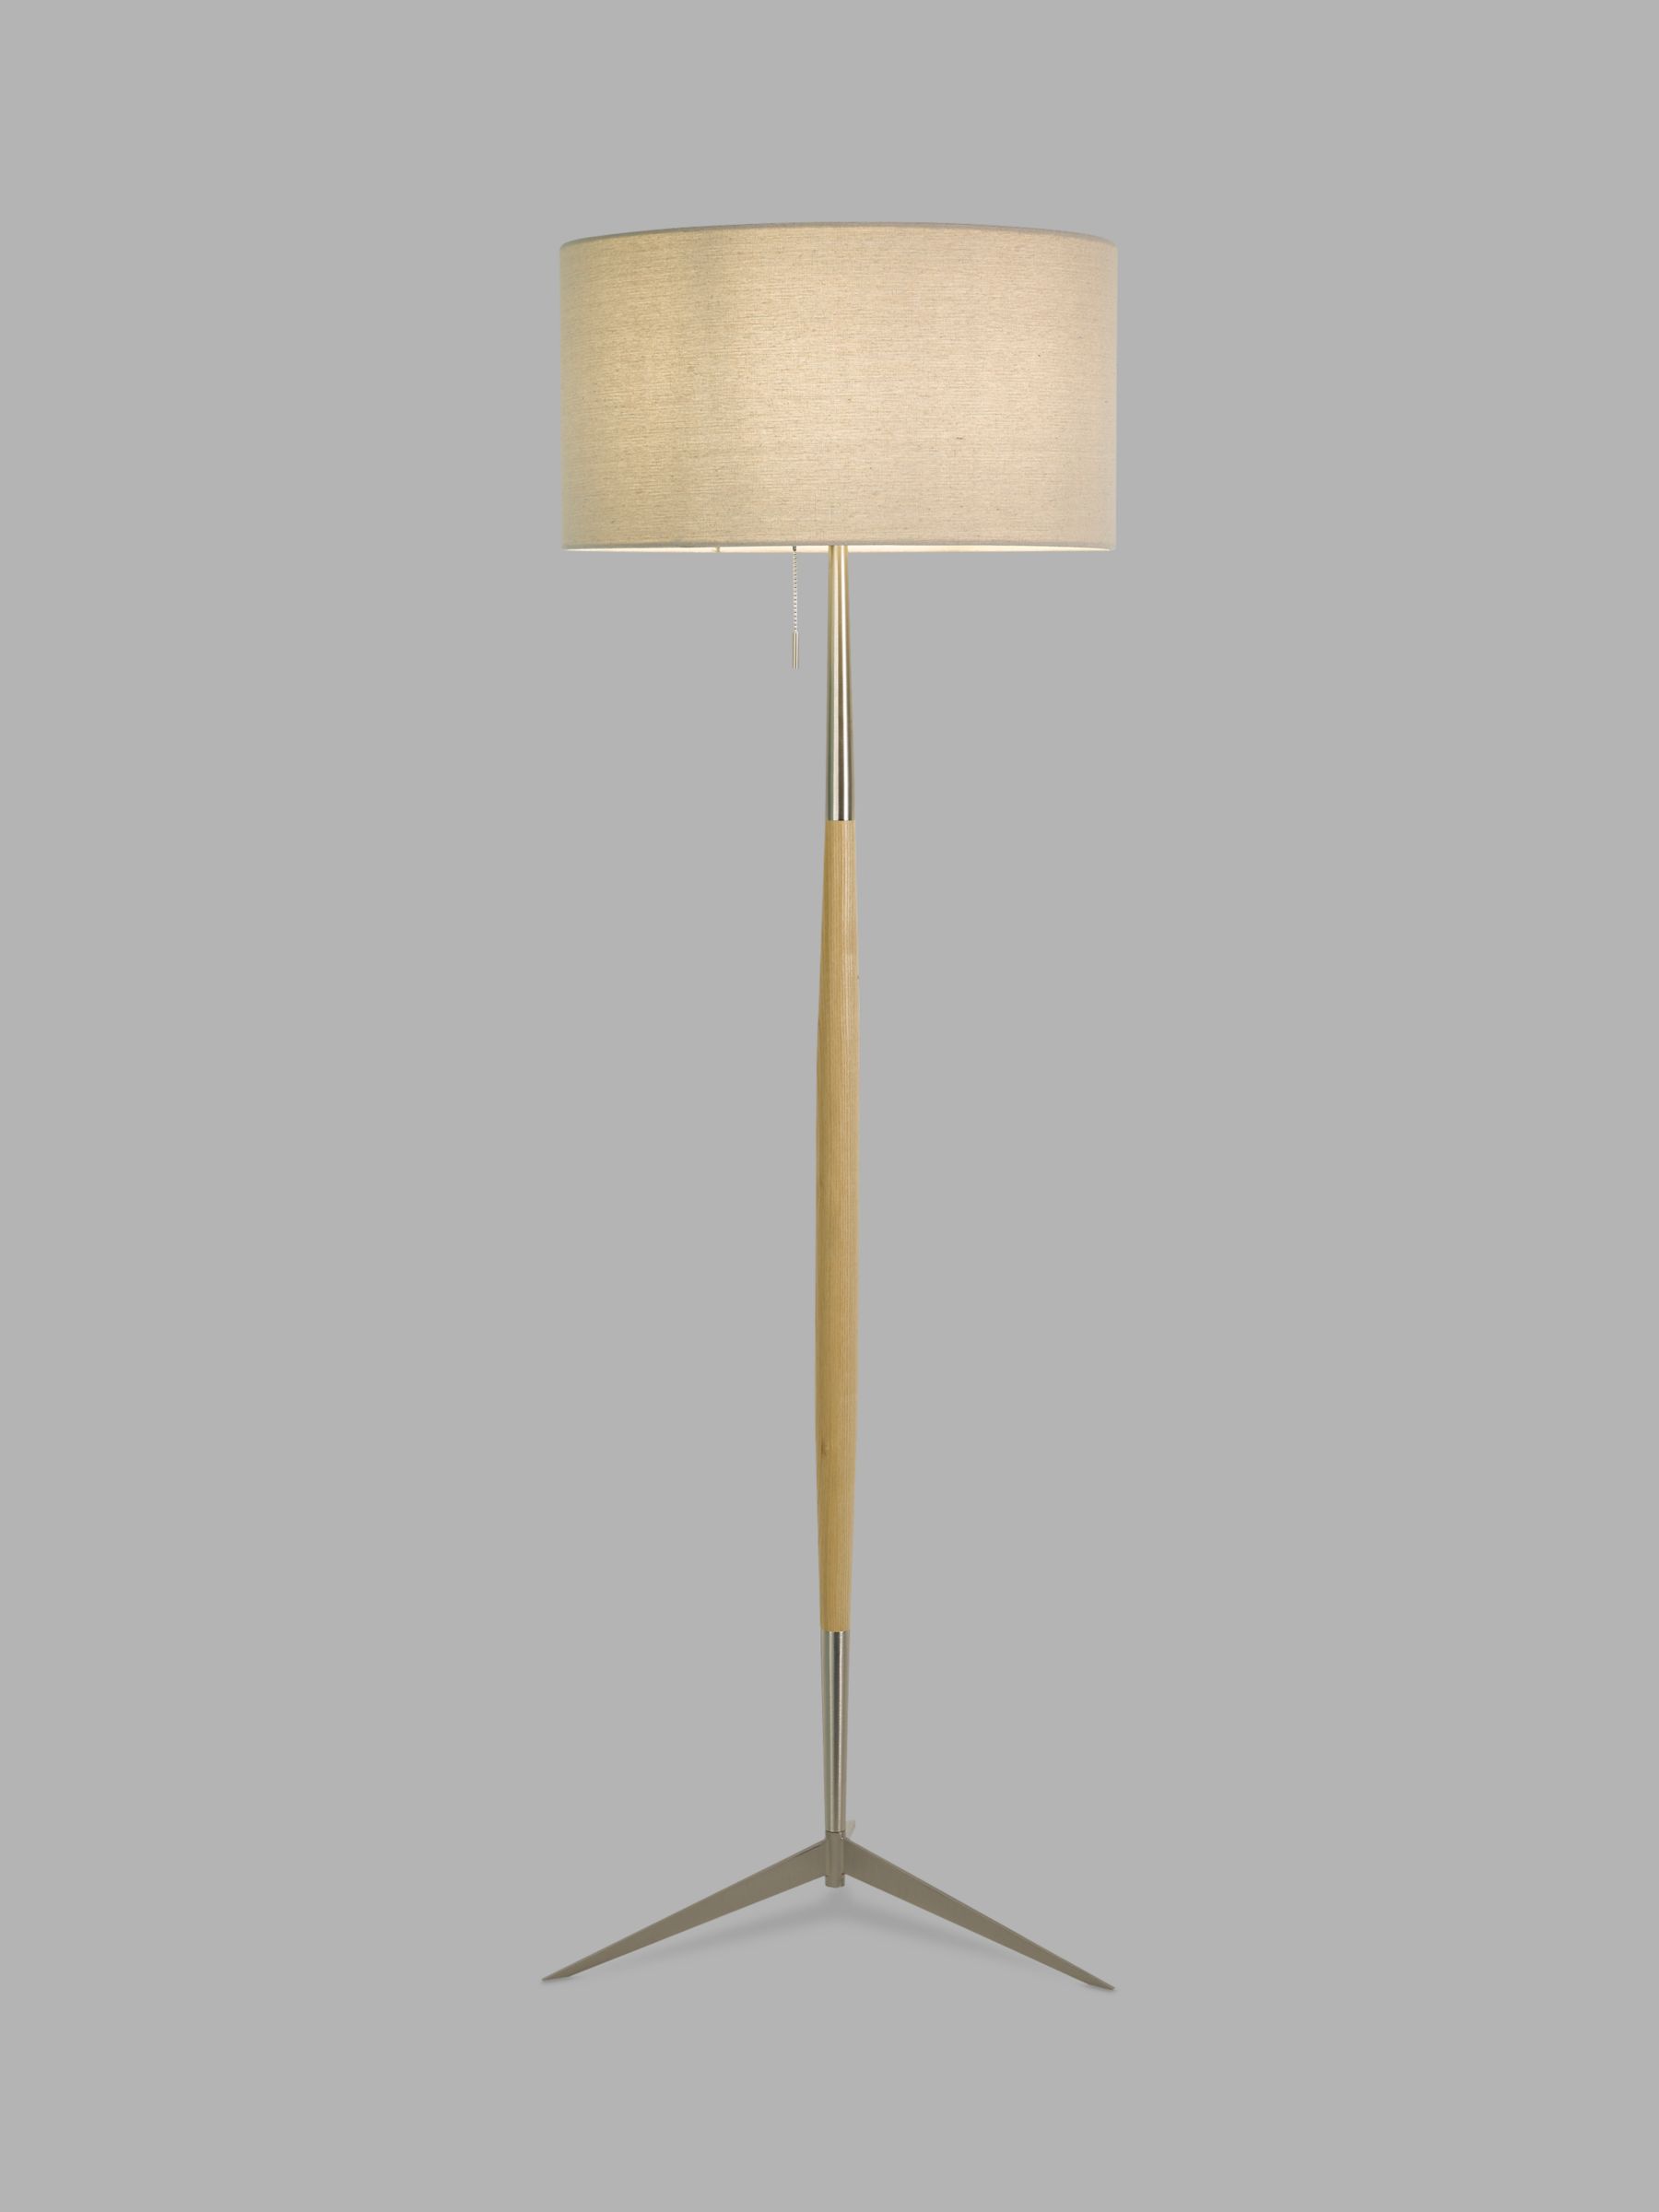 Photo of John lewis spindle wooden floor lamp